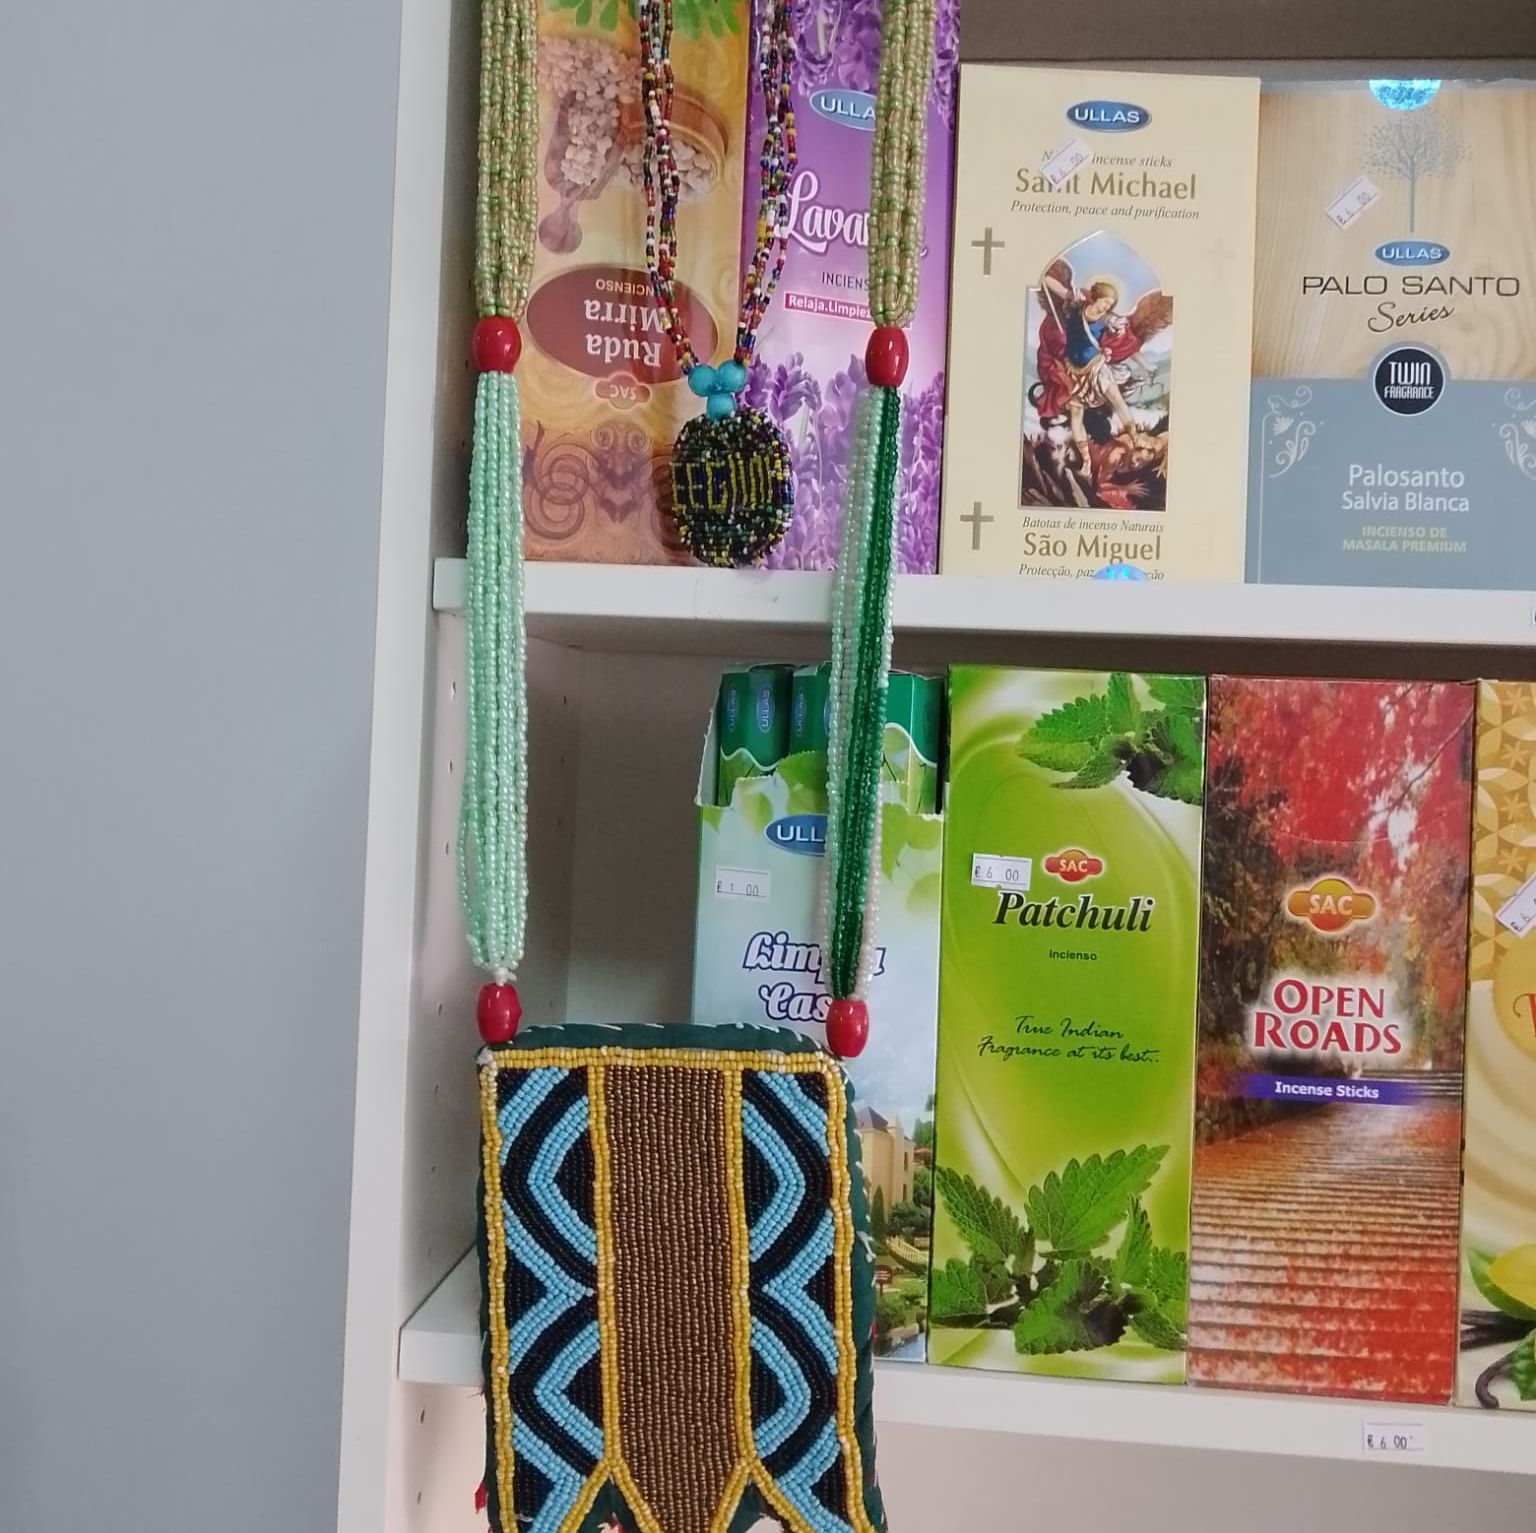 Baba Orisanla estanteria con productos